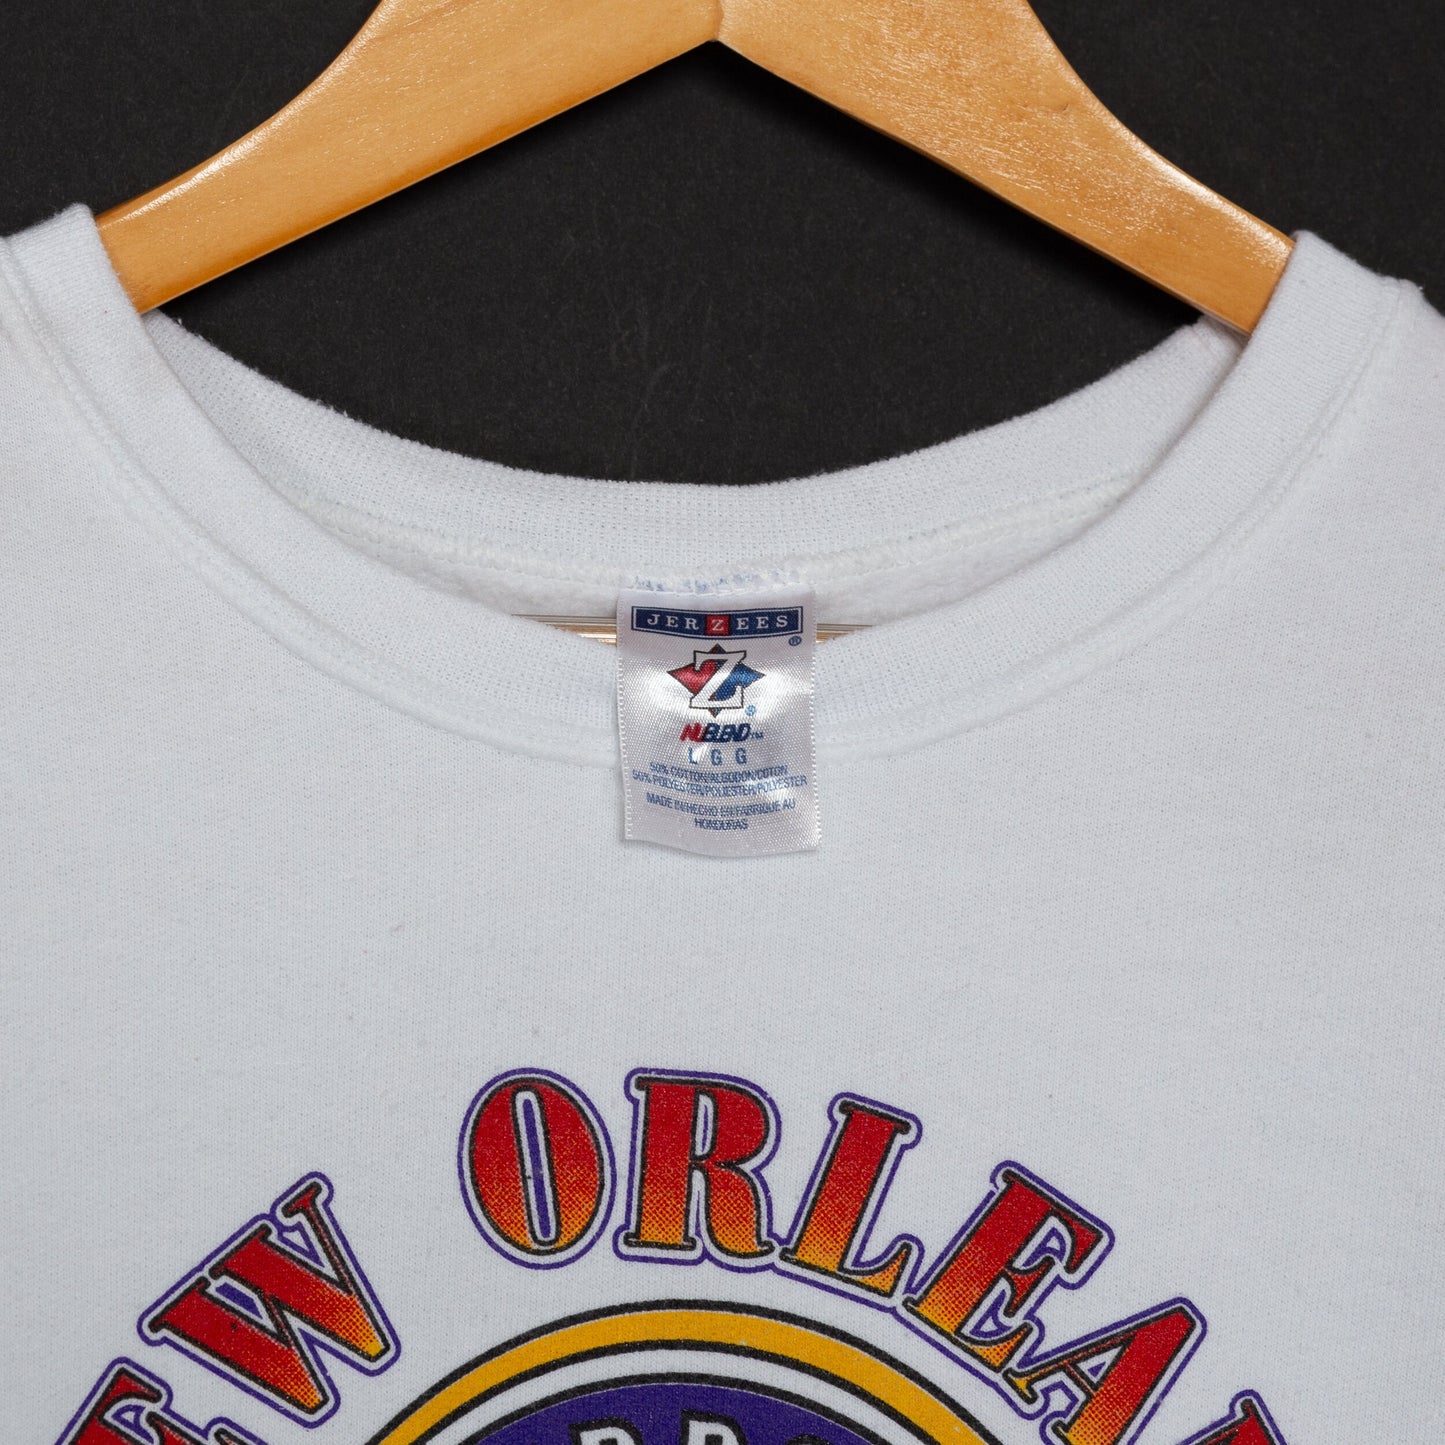 Large 90s New Orleans Bourbon St Sweatshirt | Vintage White French Quarter Jazz Music Tourist Crewneck